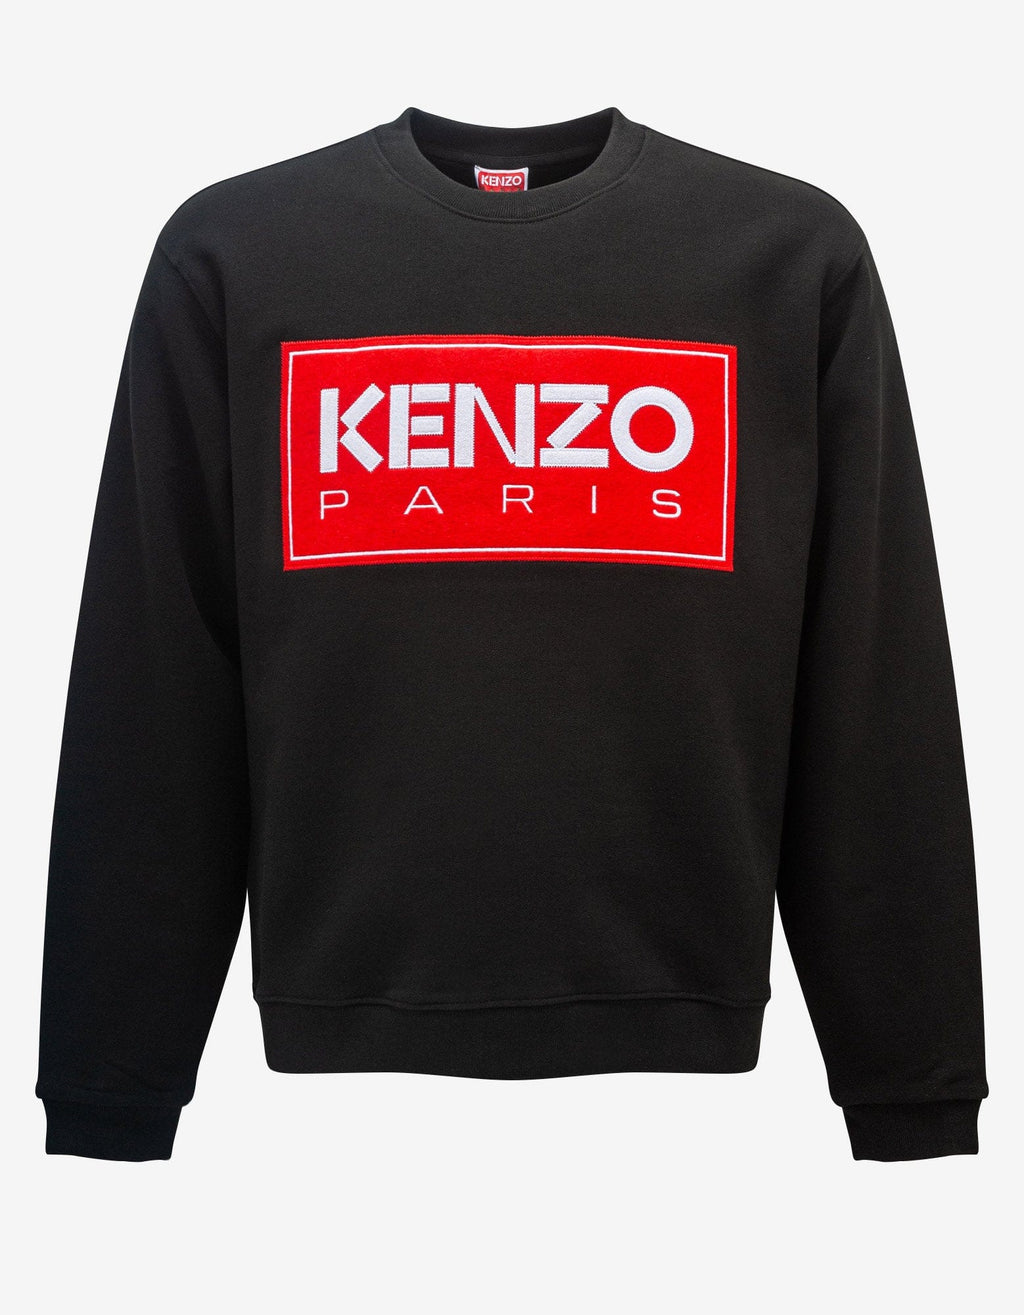 Kenzo Kenzo Black Paris Classic Sweatshirt